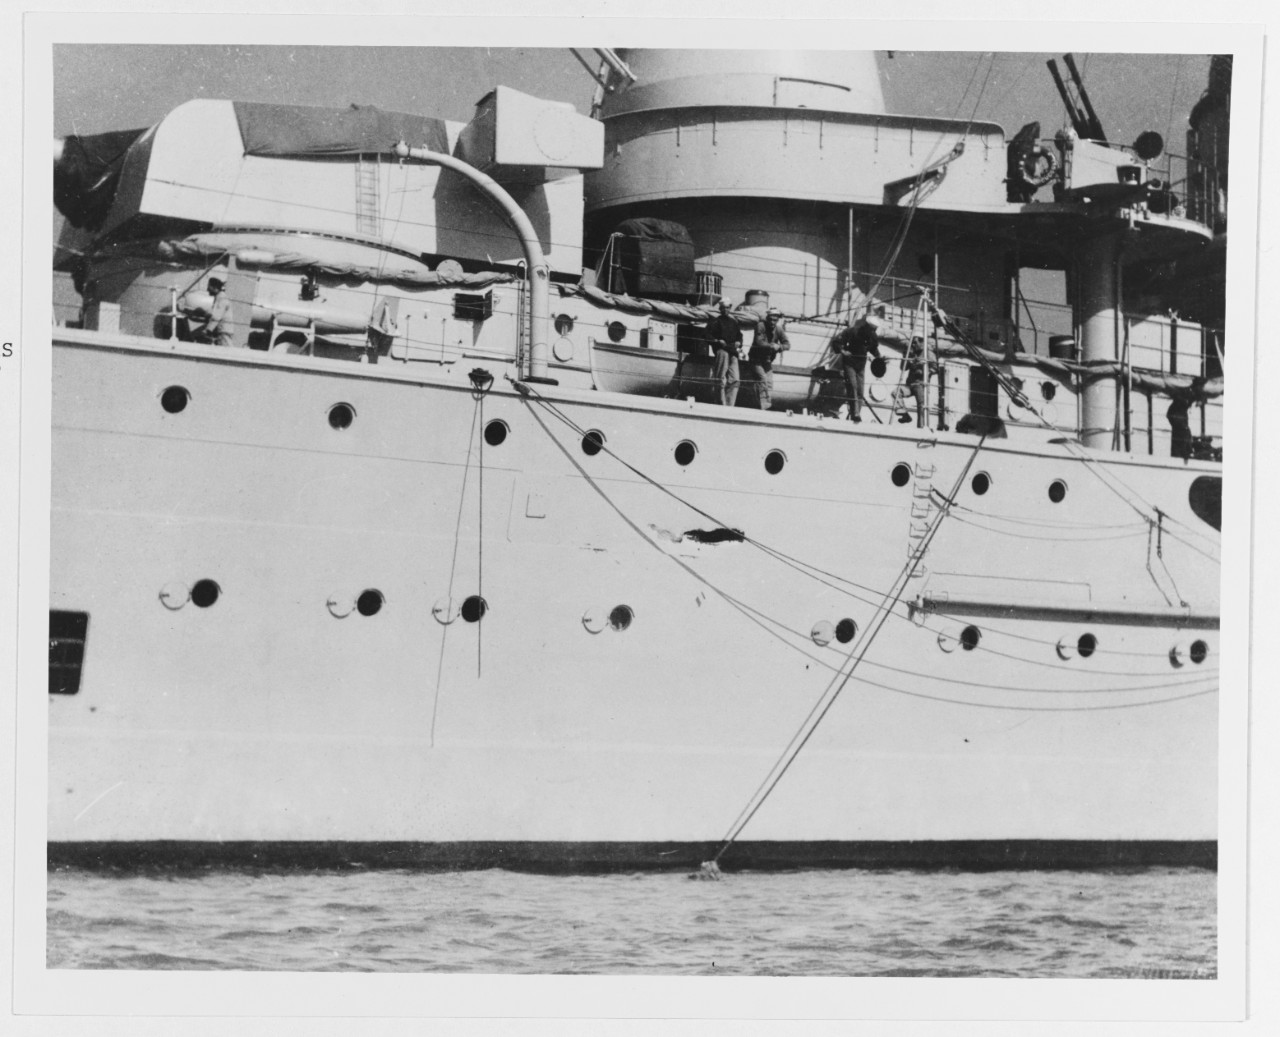 RAIMONDO MONTECUCCOLI (Italian cruiser, 1934)